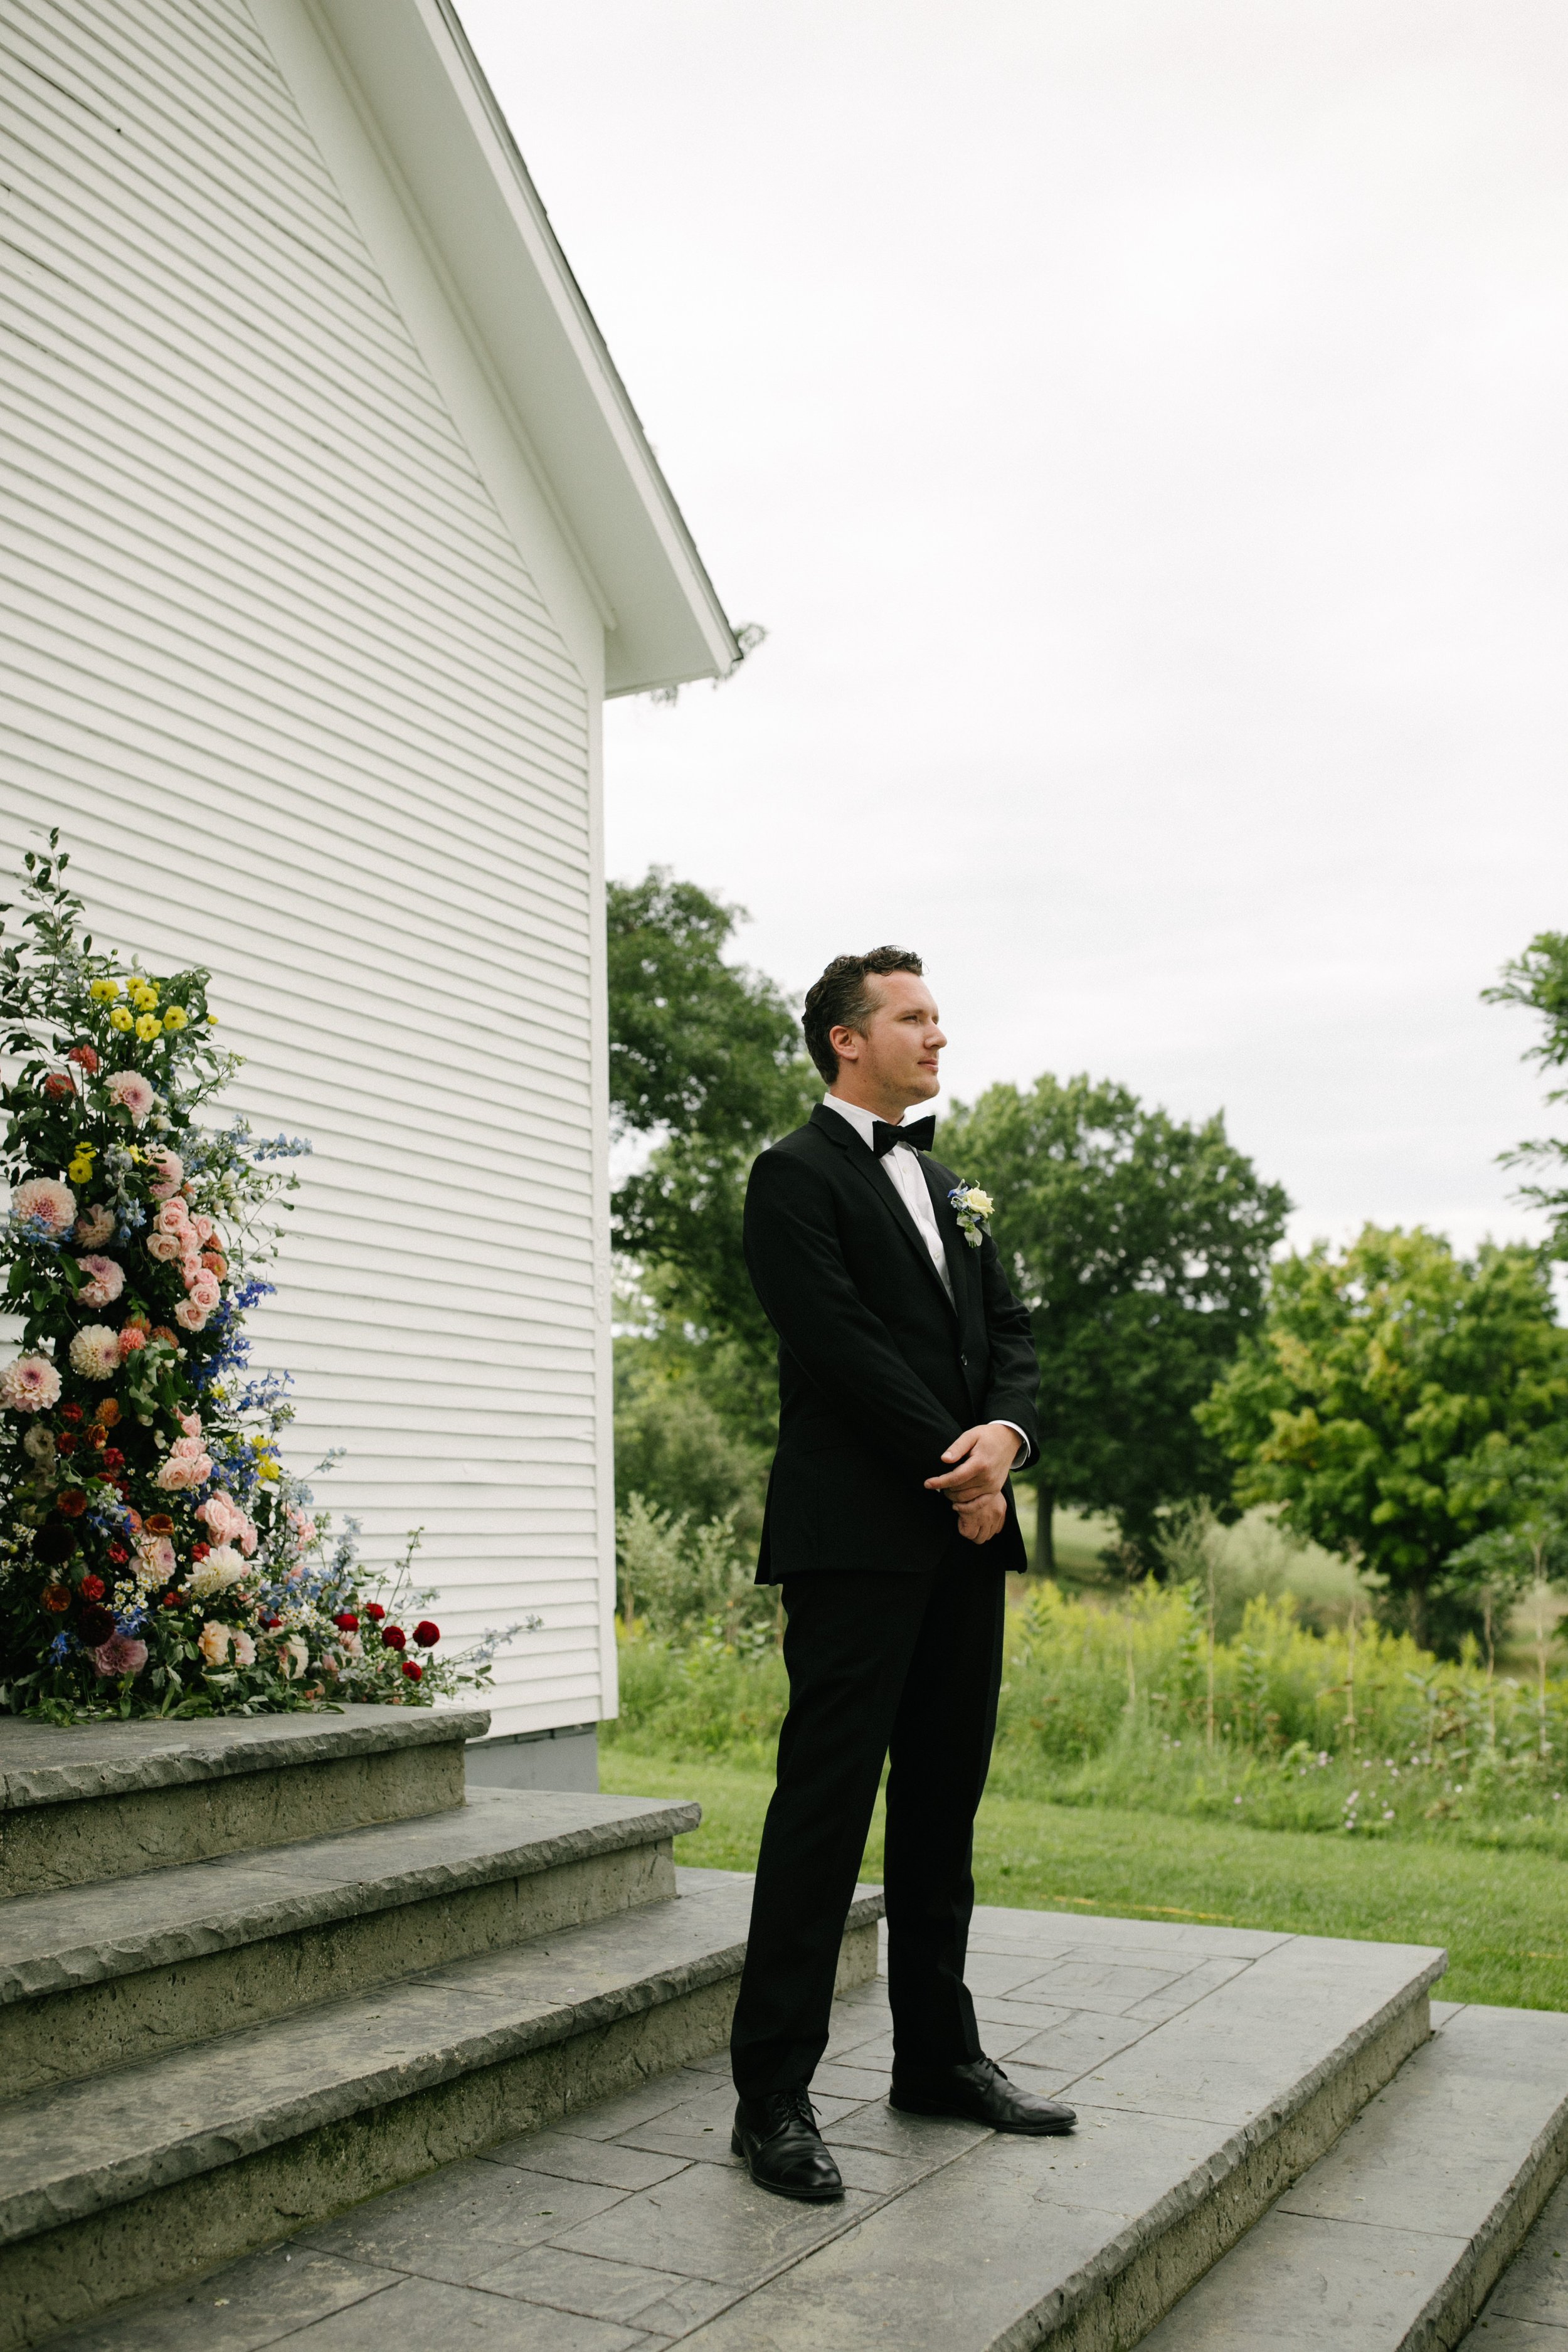 Michigan-Photographer-The-Felt-Estate-Wedding-296.jpg